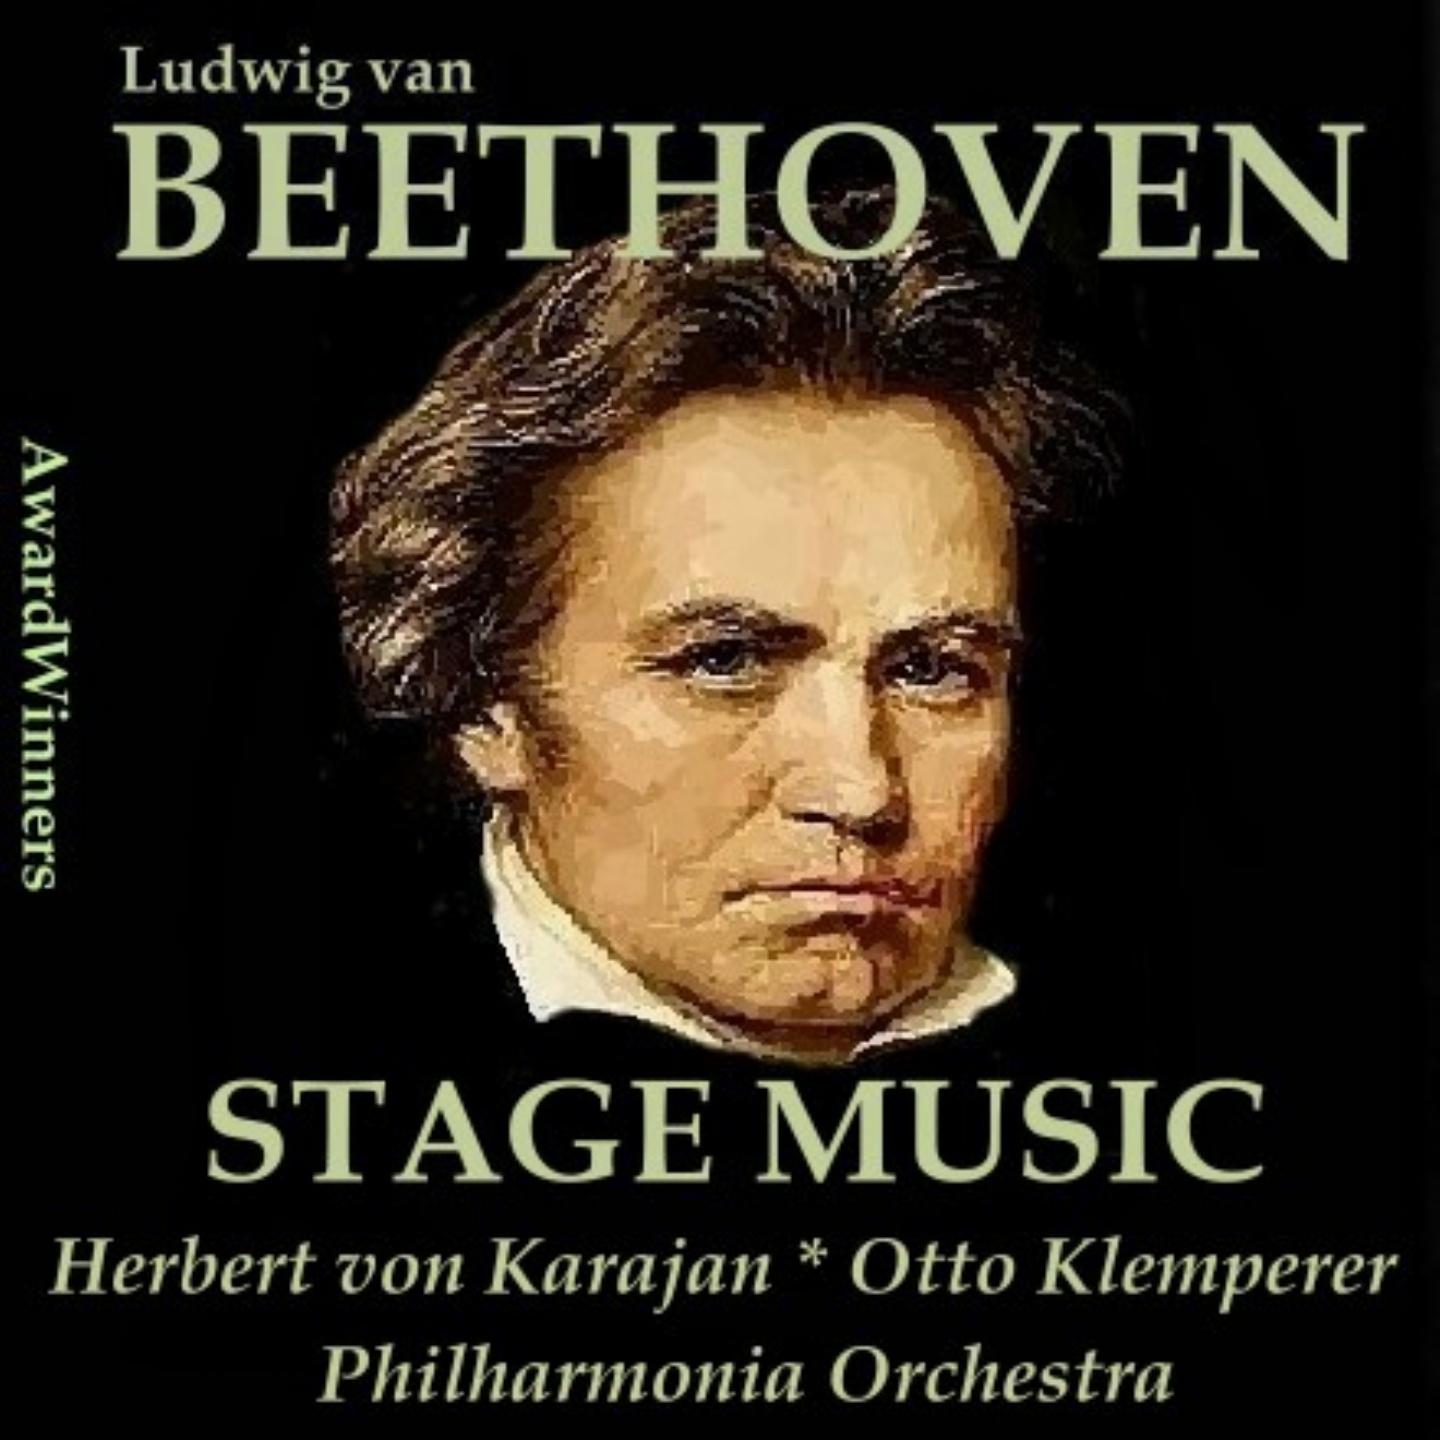 Beethoven, Vol. 12 - Scene Music